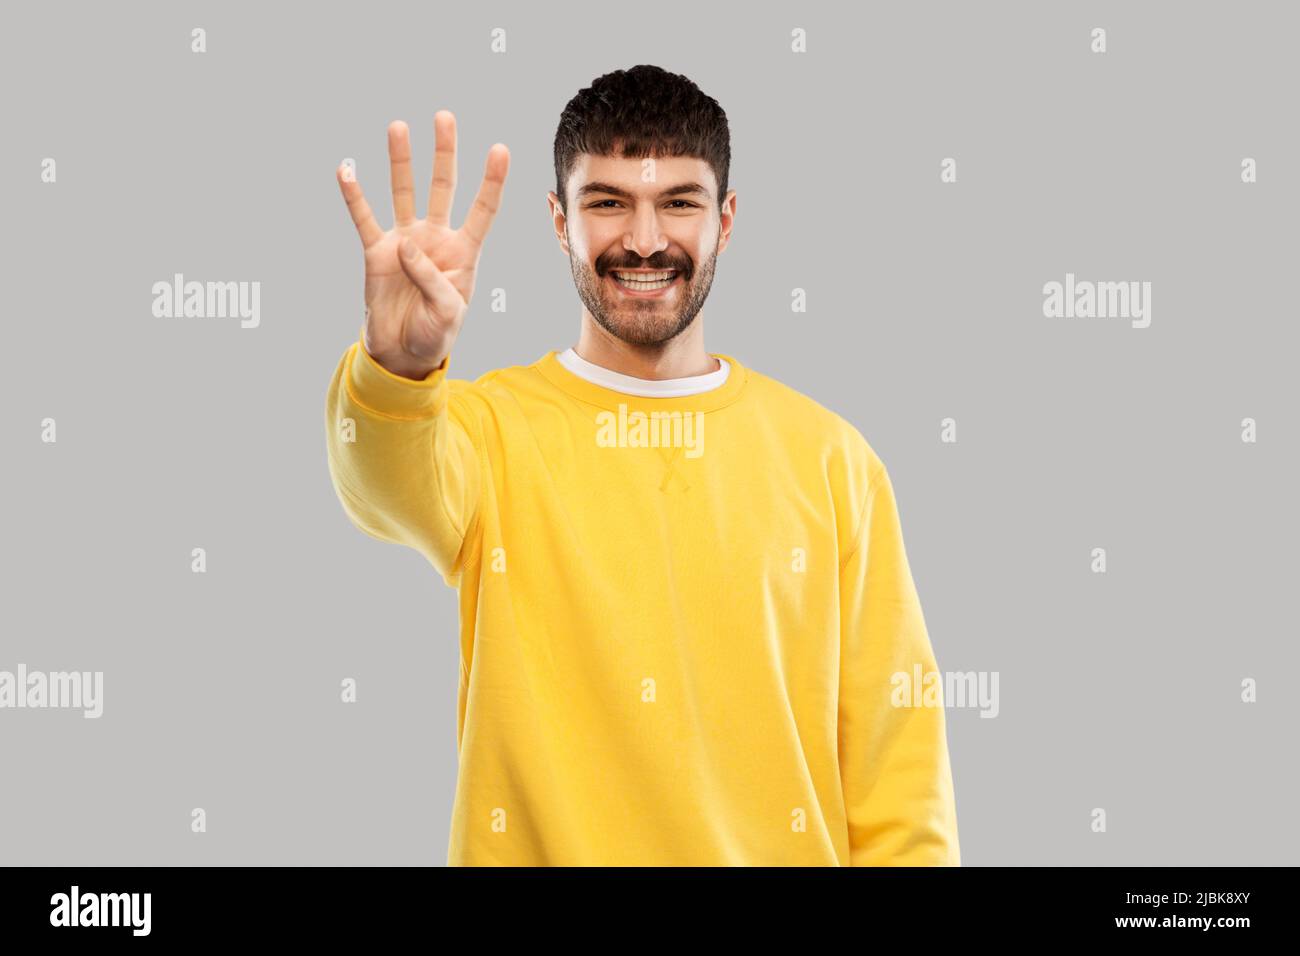 man in yellow sweatshirt showing three fingers Stock Photo